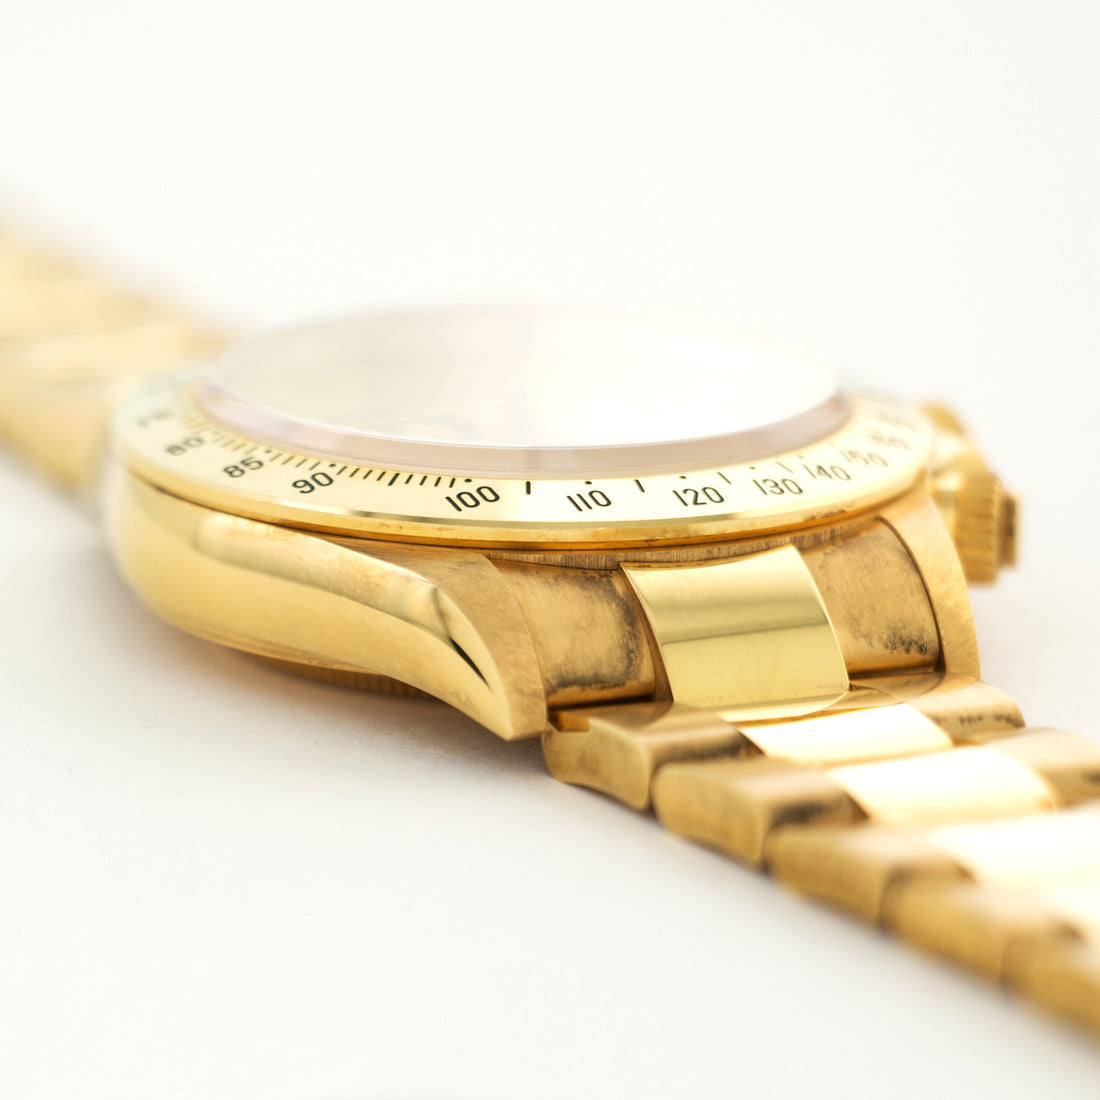 New Old Stock Rolex Yellow Gold Daytona Watch Ref. 16528